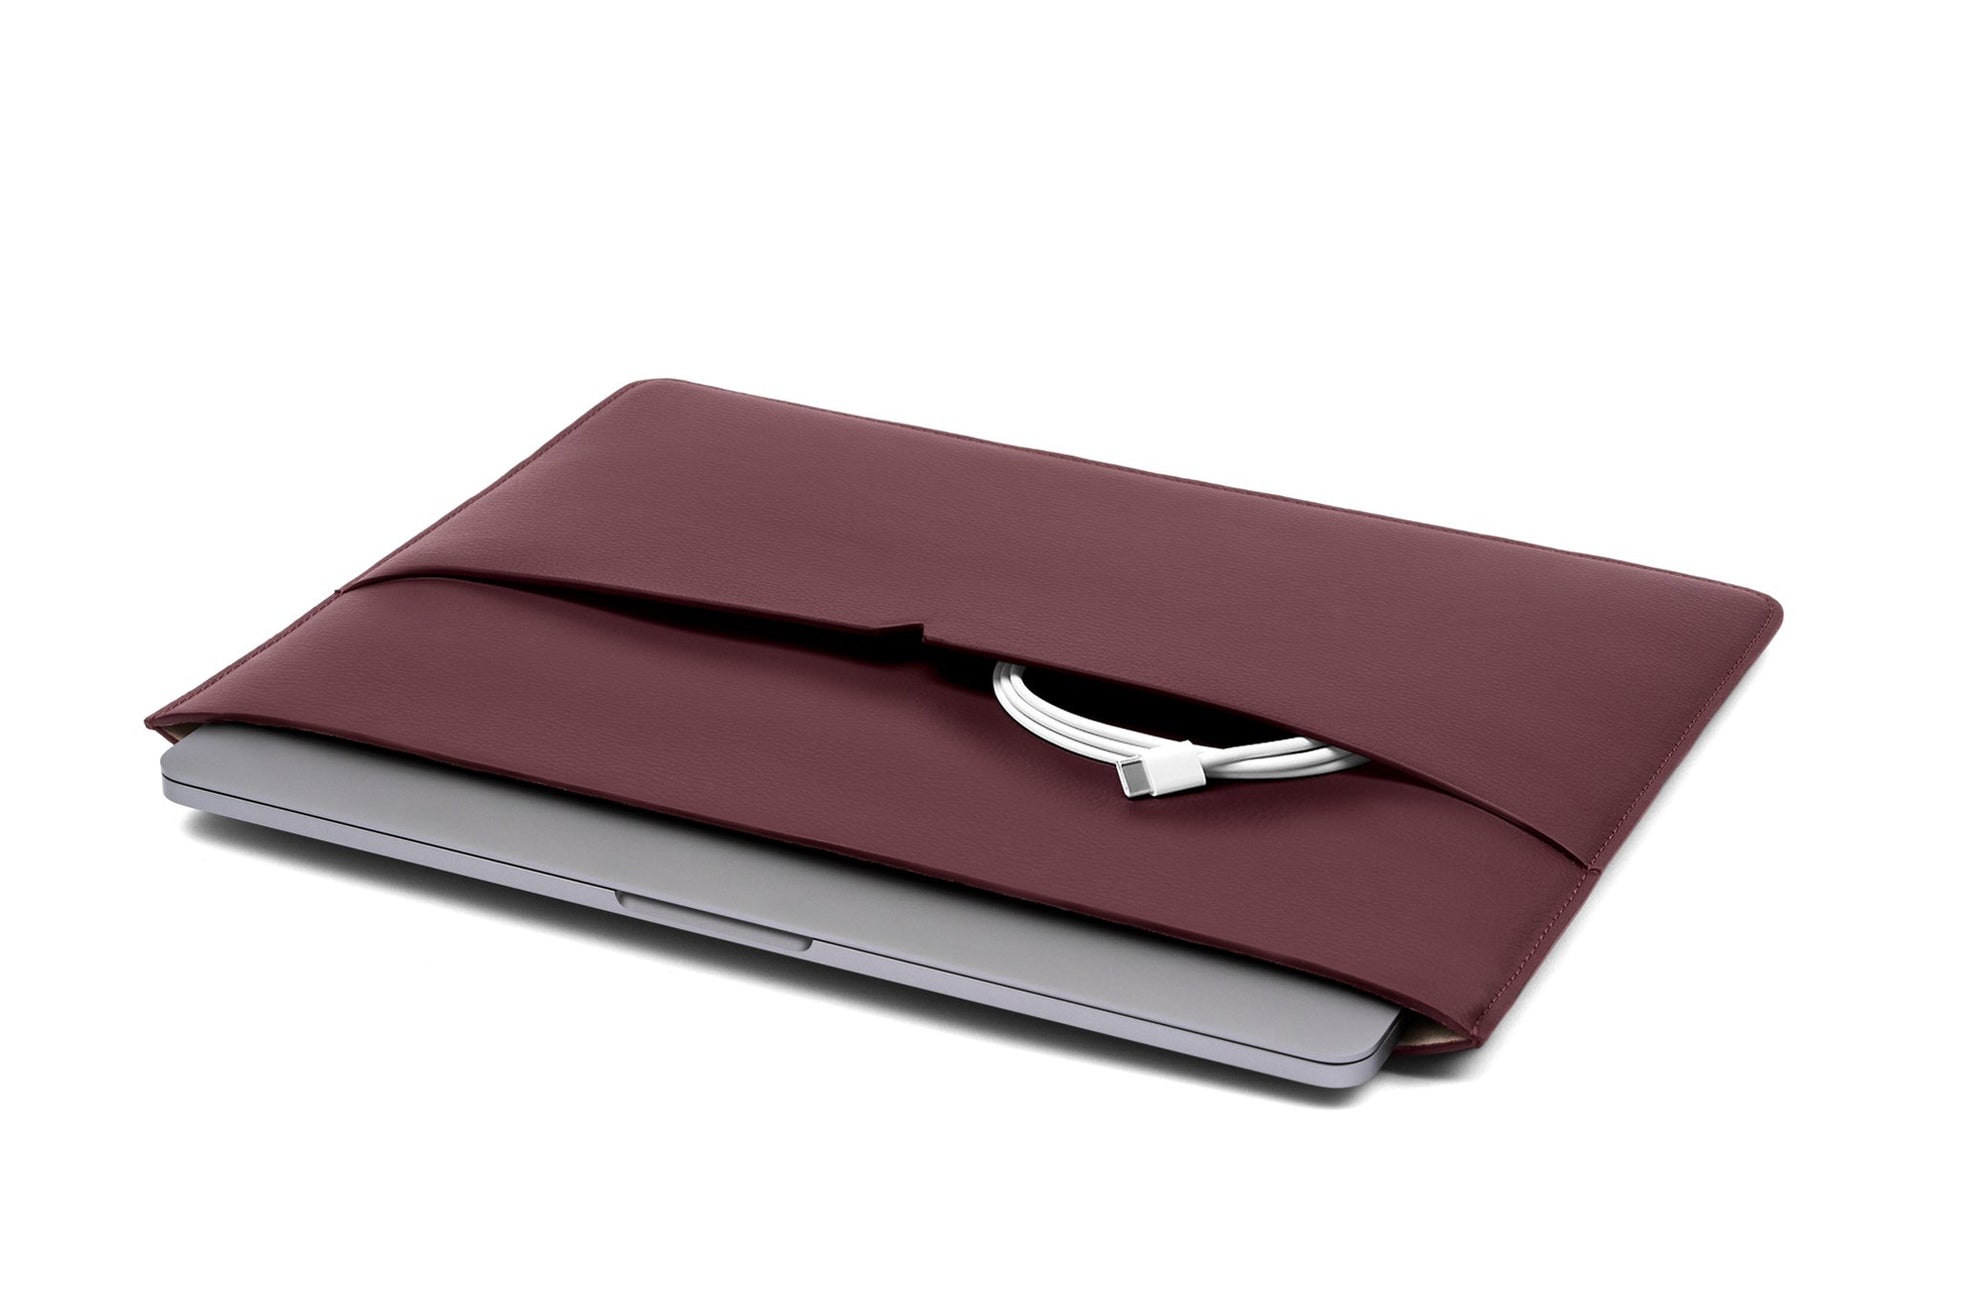 The MacBook Sleeve 13-inch - Sample Sale in Technik in Burgundy image 4